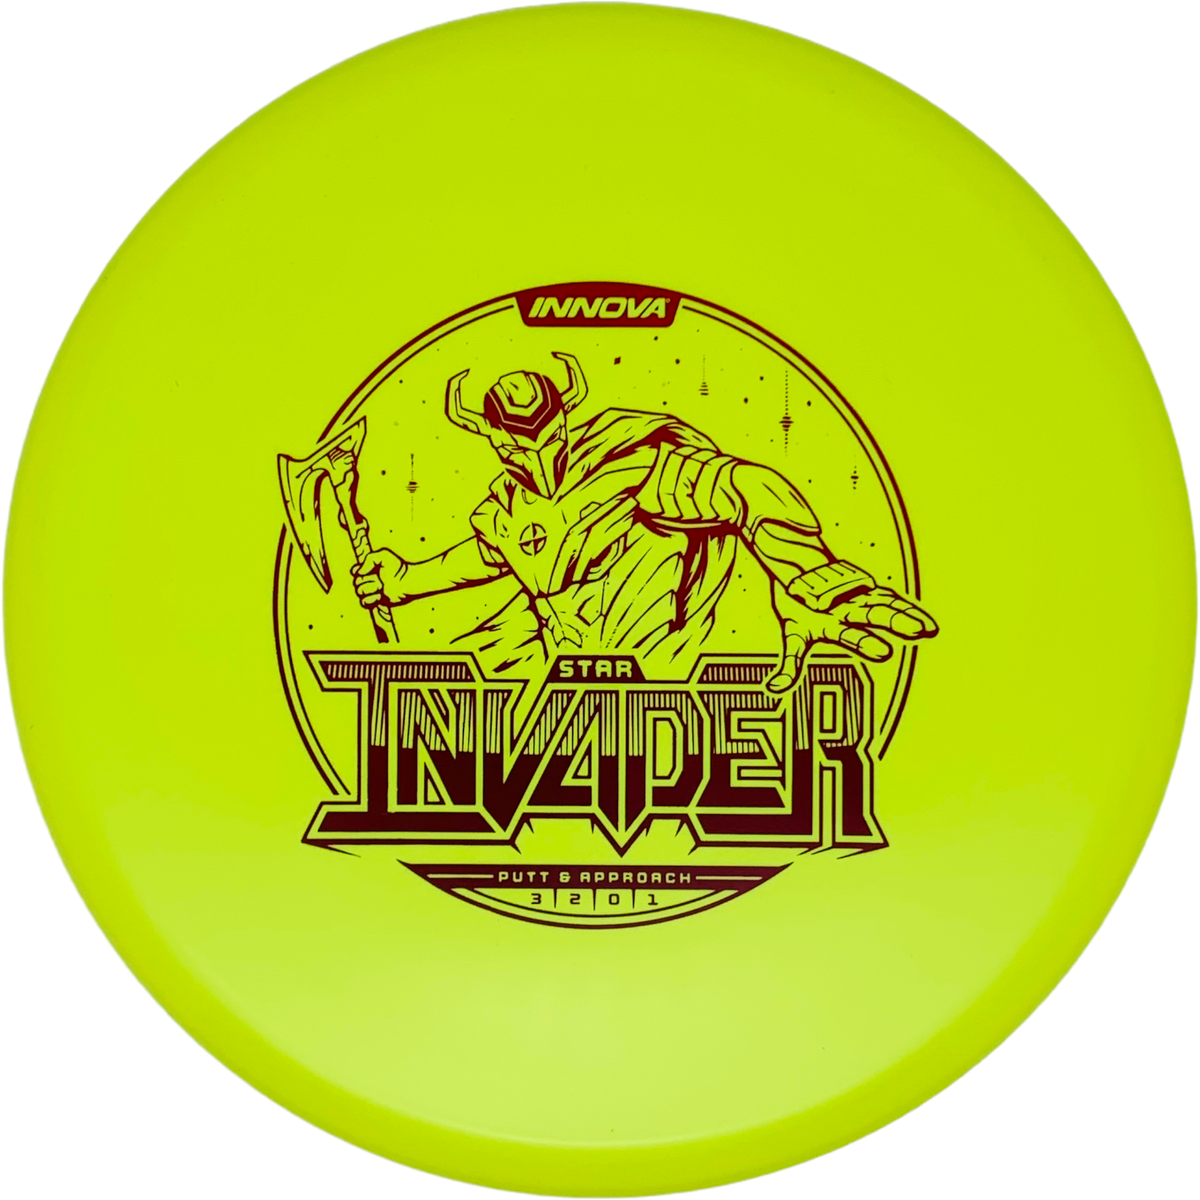 Innova Star Invader - Invader Stamp